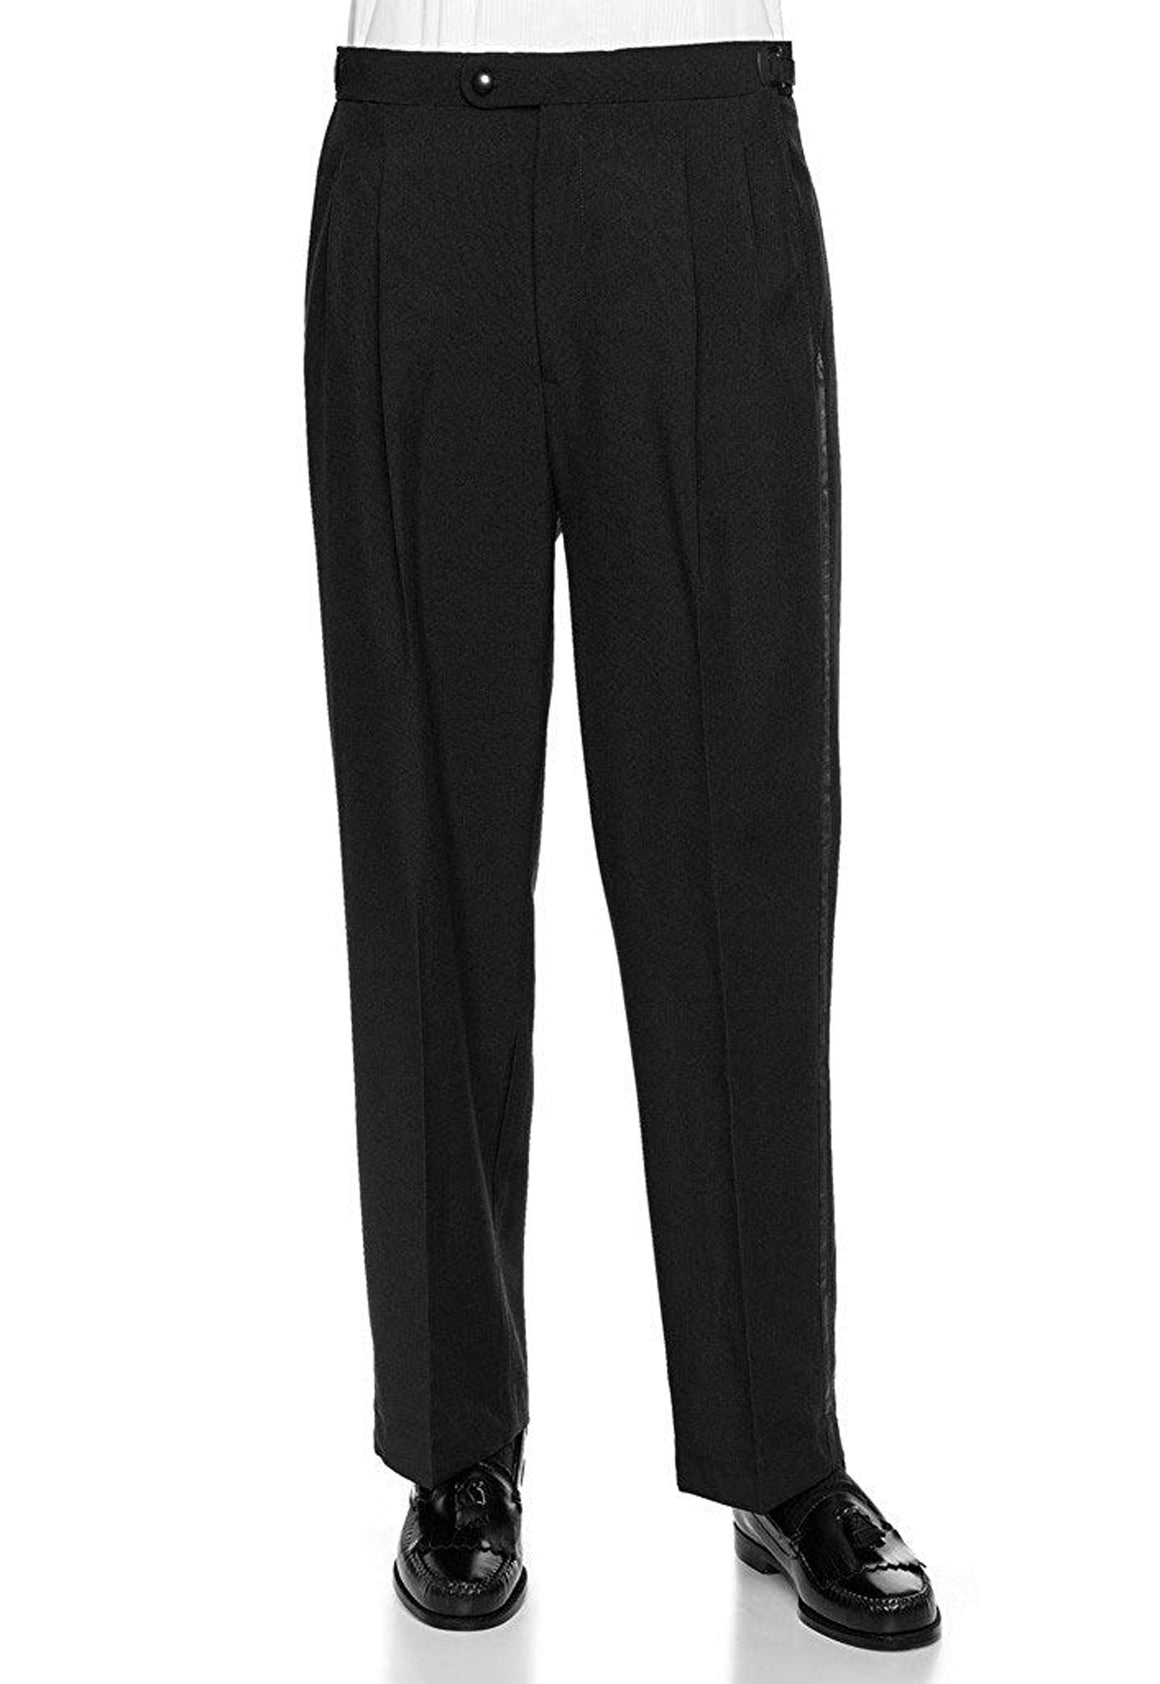 Men's Black, Pleated Front, Comfort-Waist Tuxedo Pants with Satin Stripe